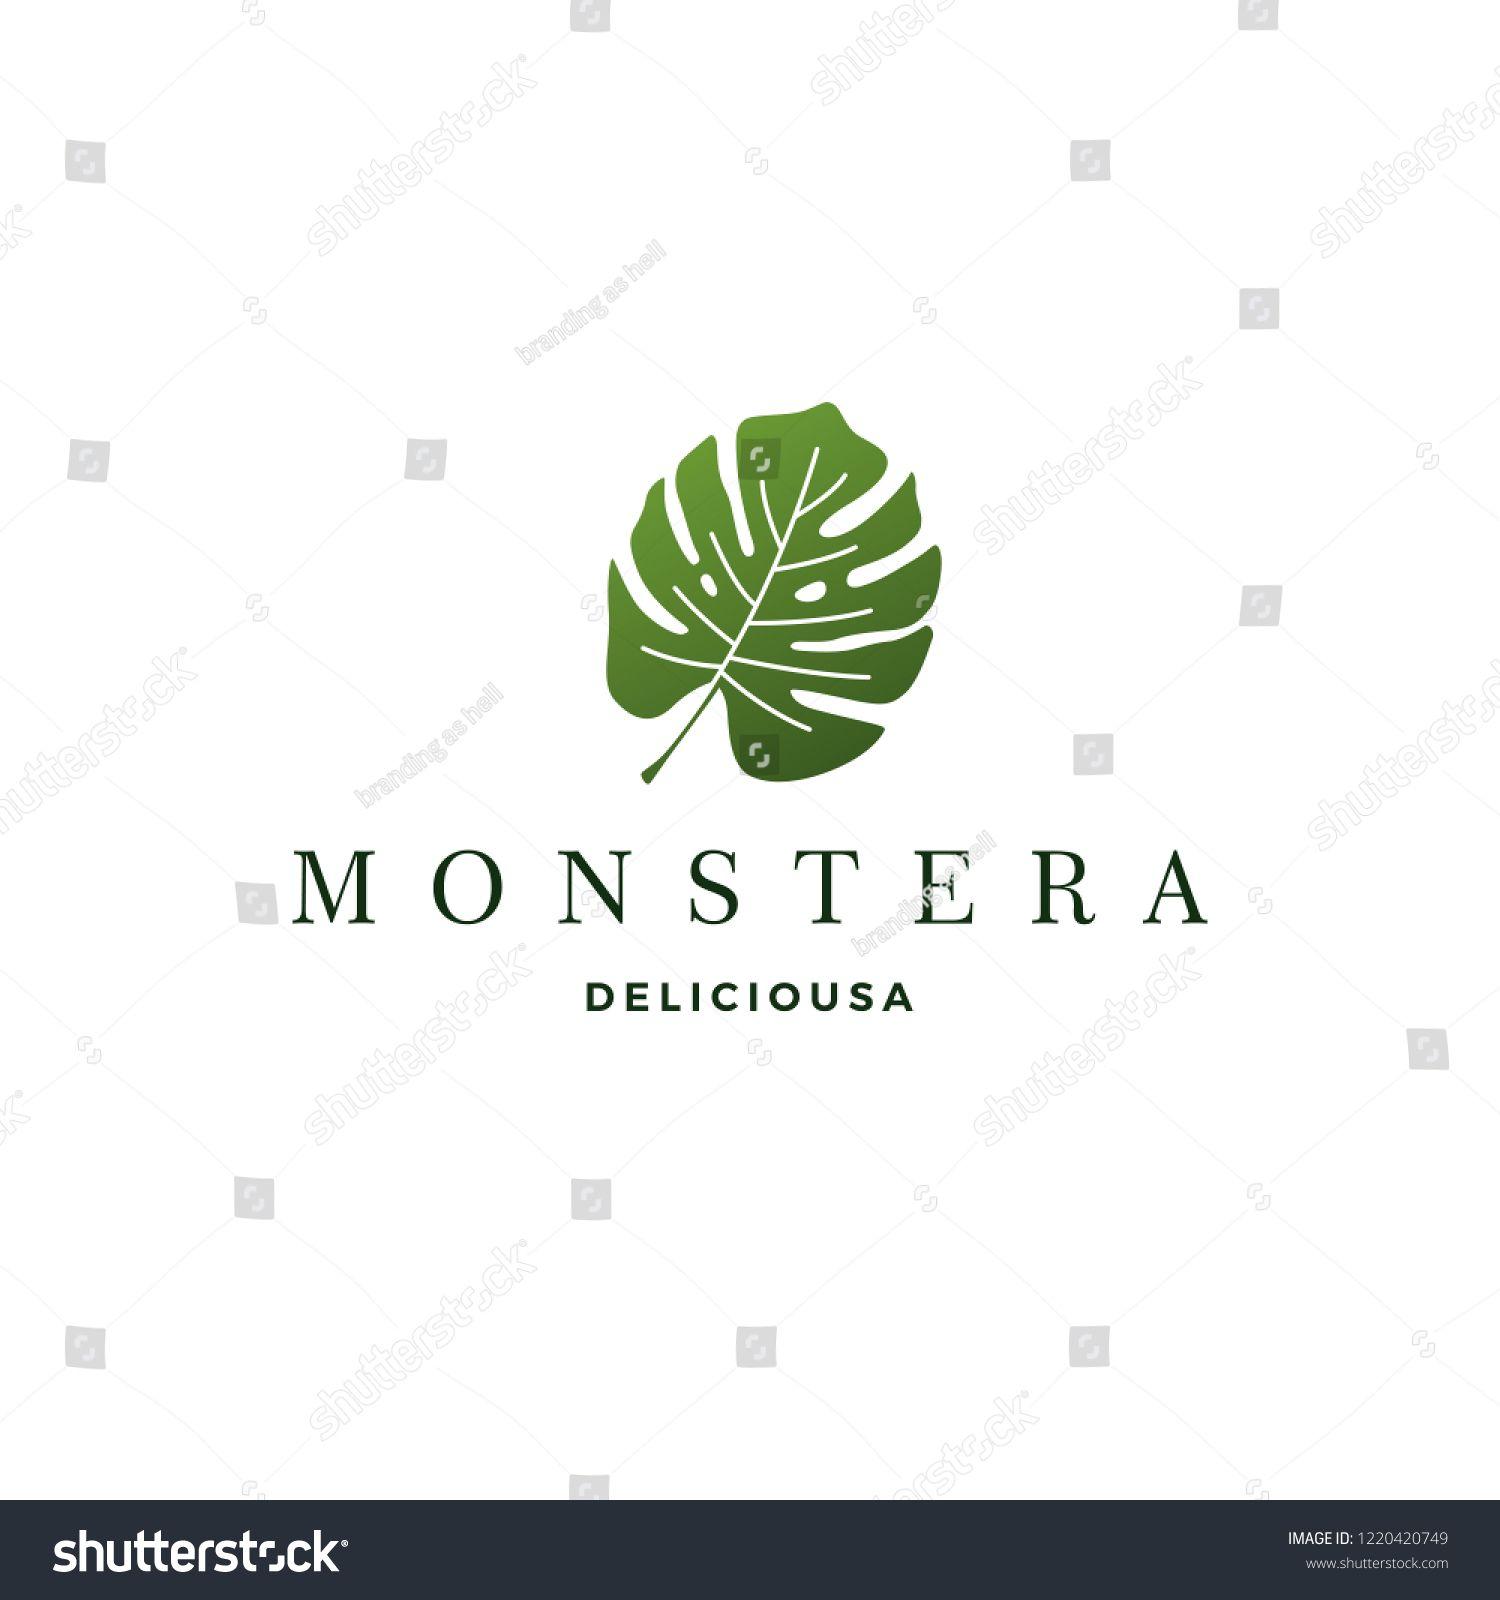 Palm Leaf Logo - monstera deliciosa deliciousa leaf logo vector icon illustration